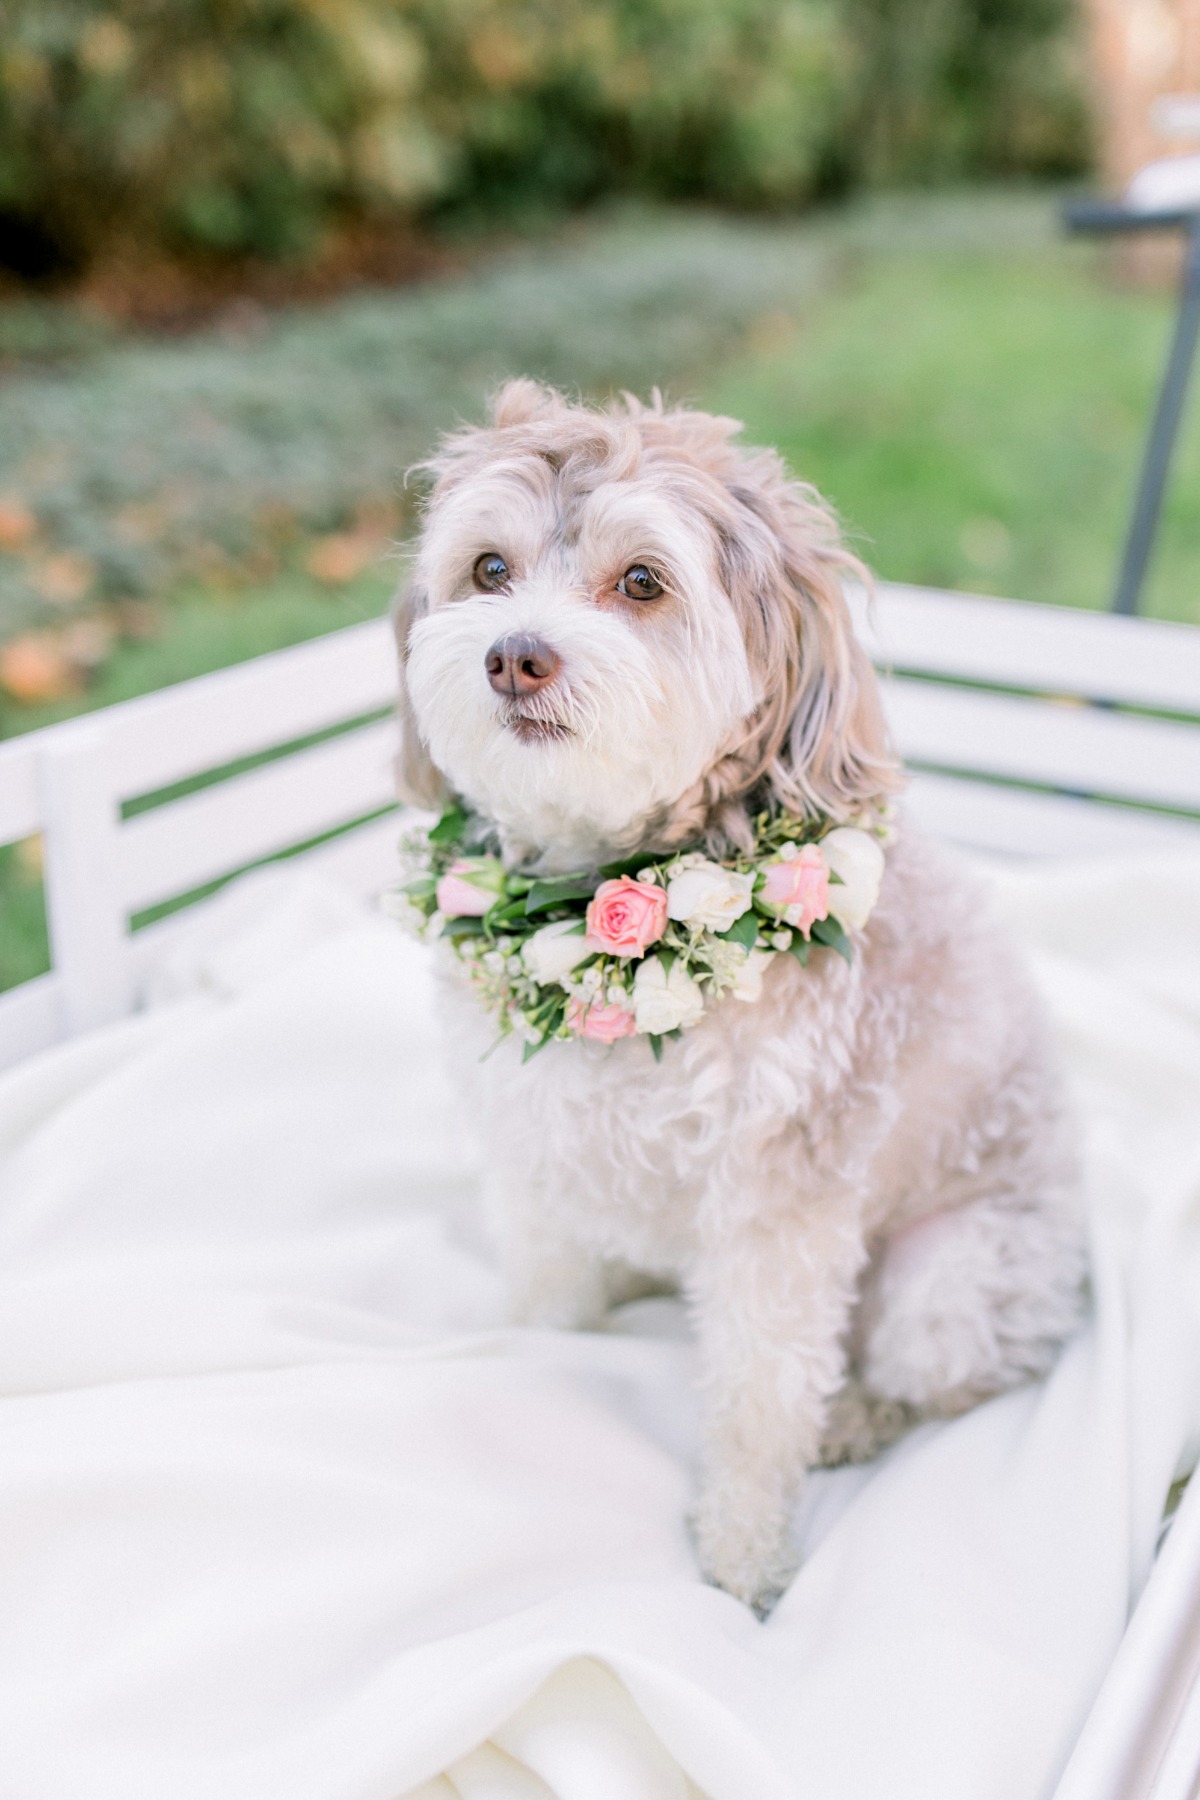 Floral dog collar